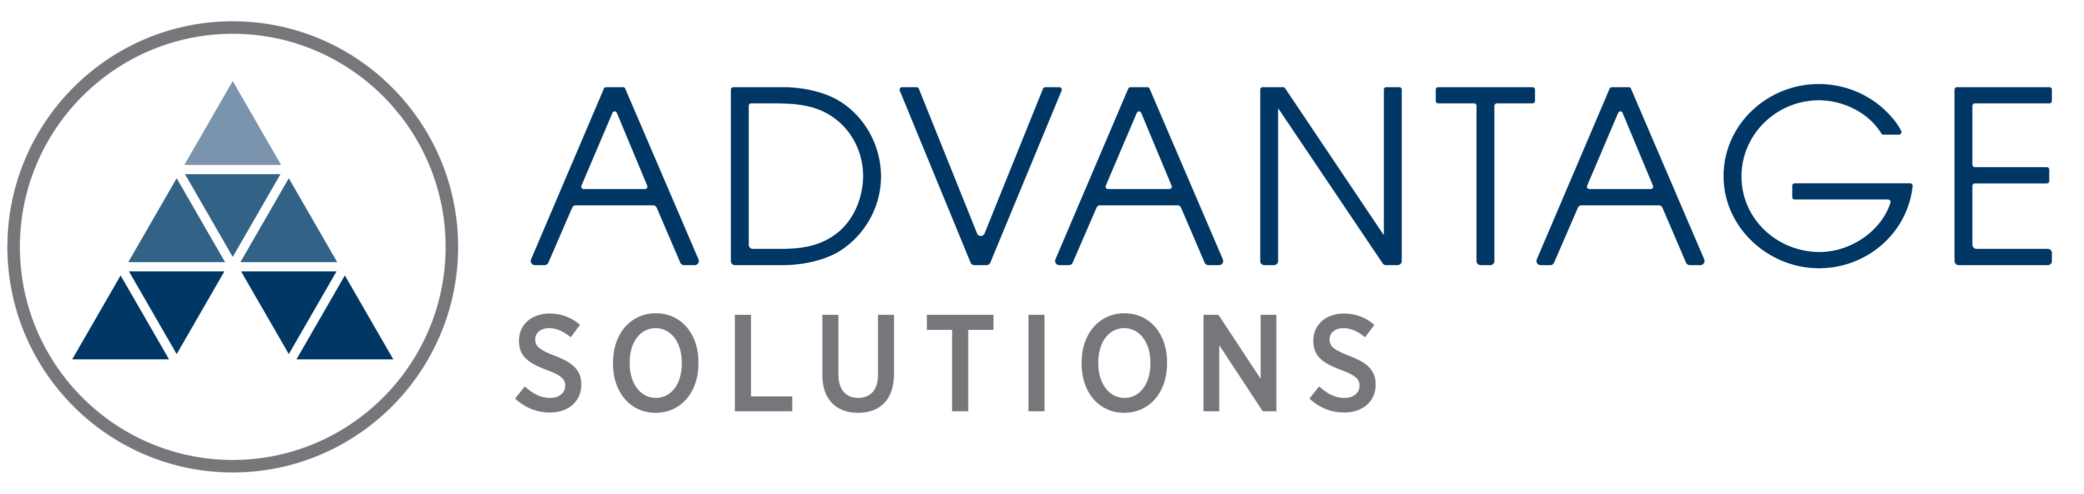 Advantage Solutions Logo